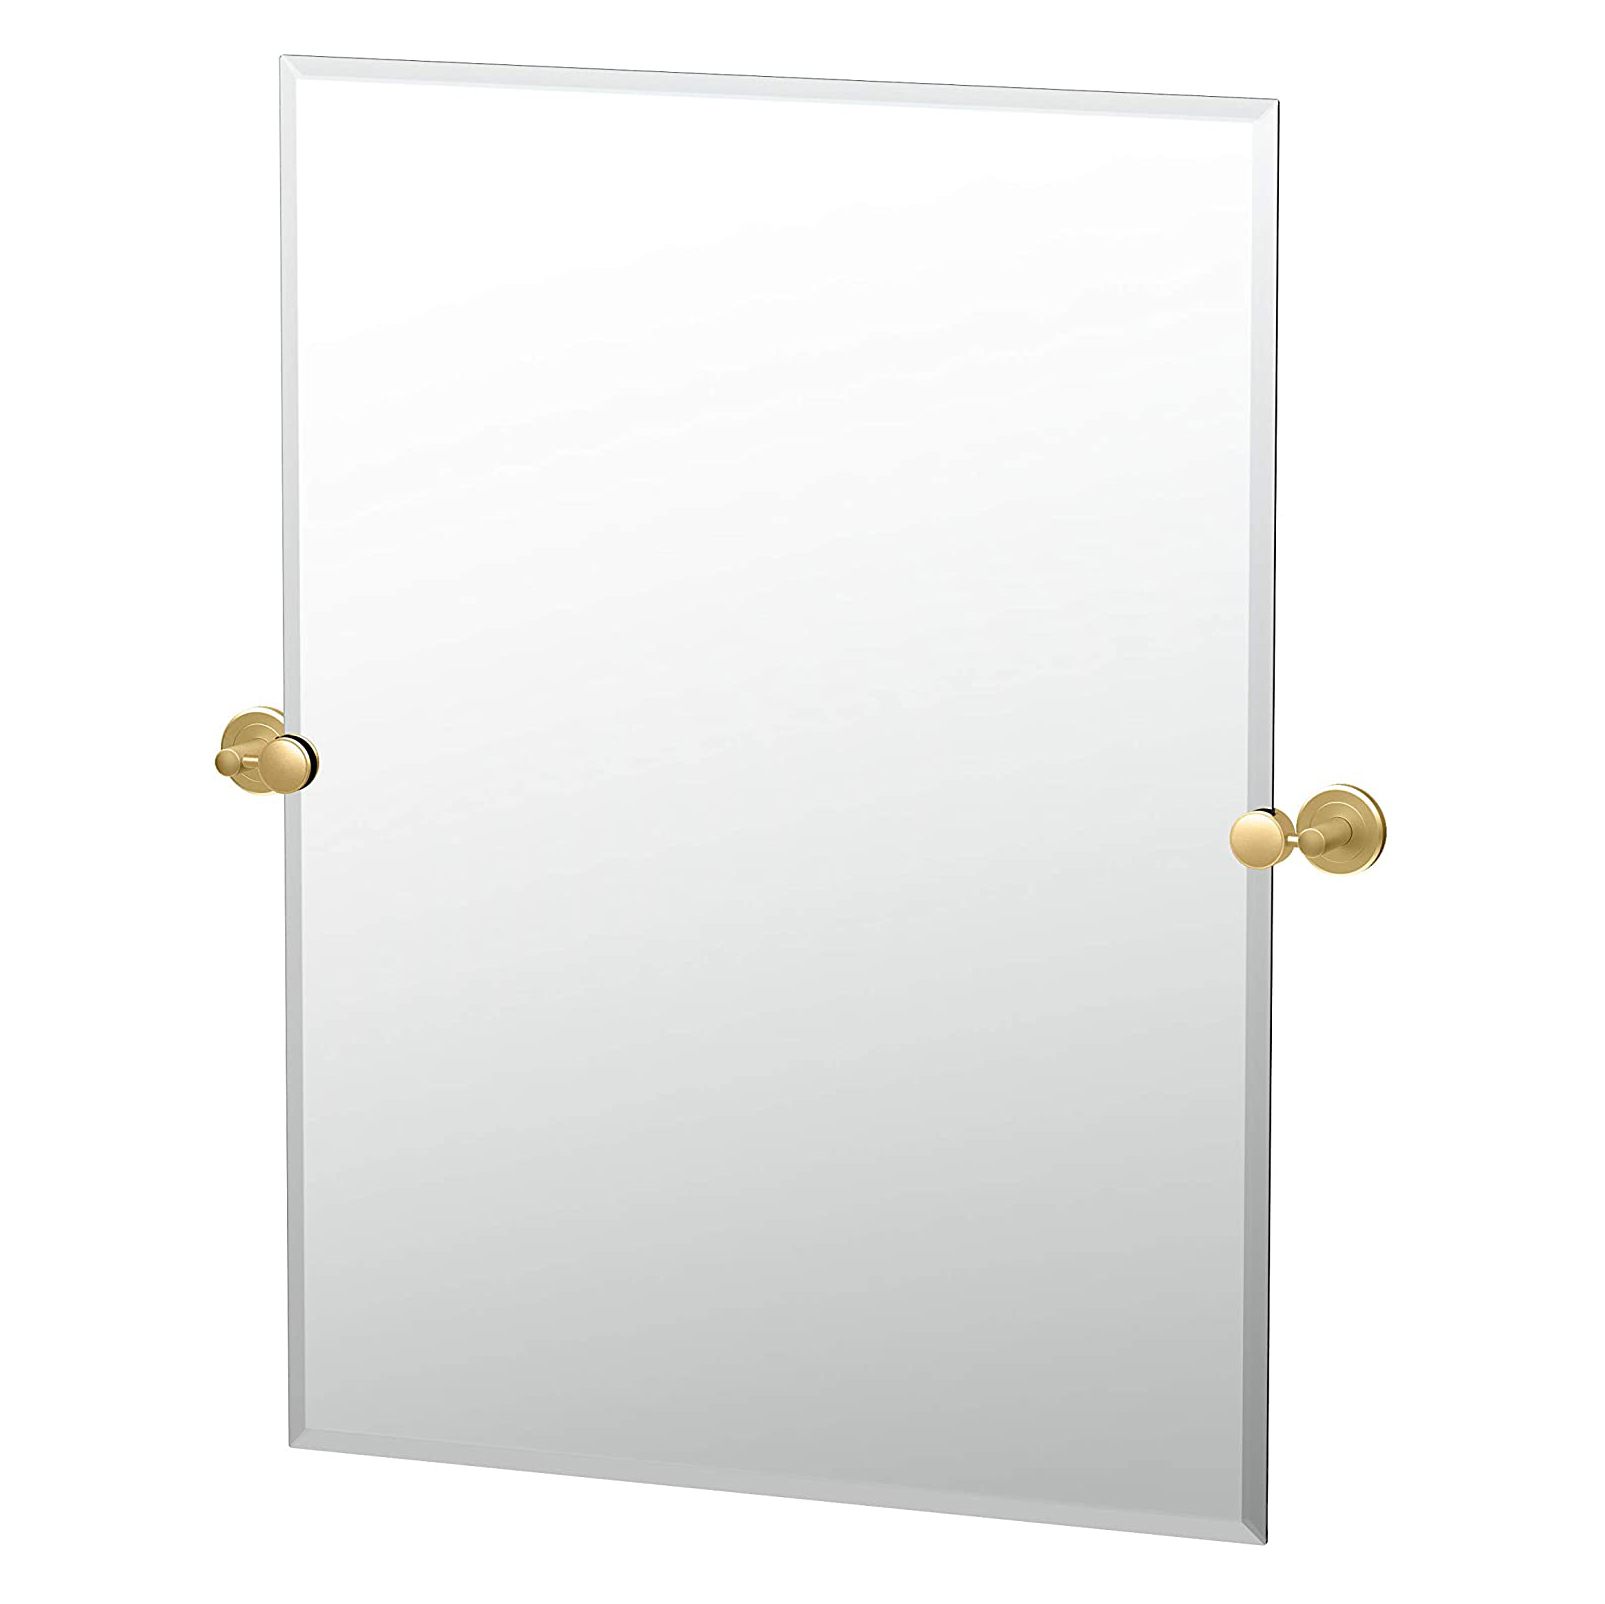 Latitude2 23-1/2x31-1/2" Frameless Rectangle Mirror in Brass